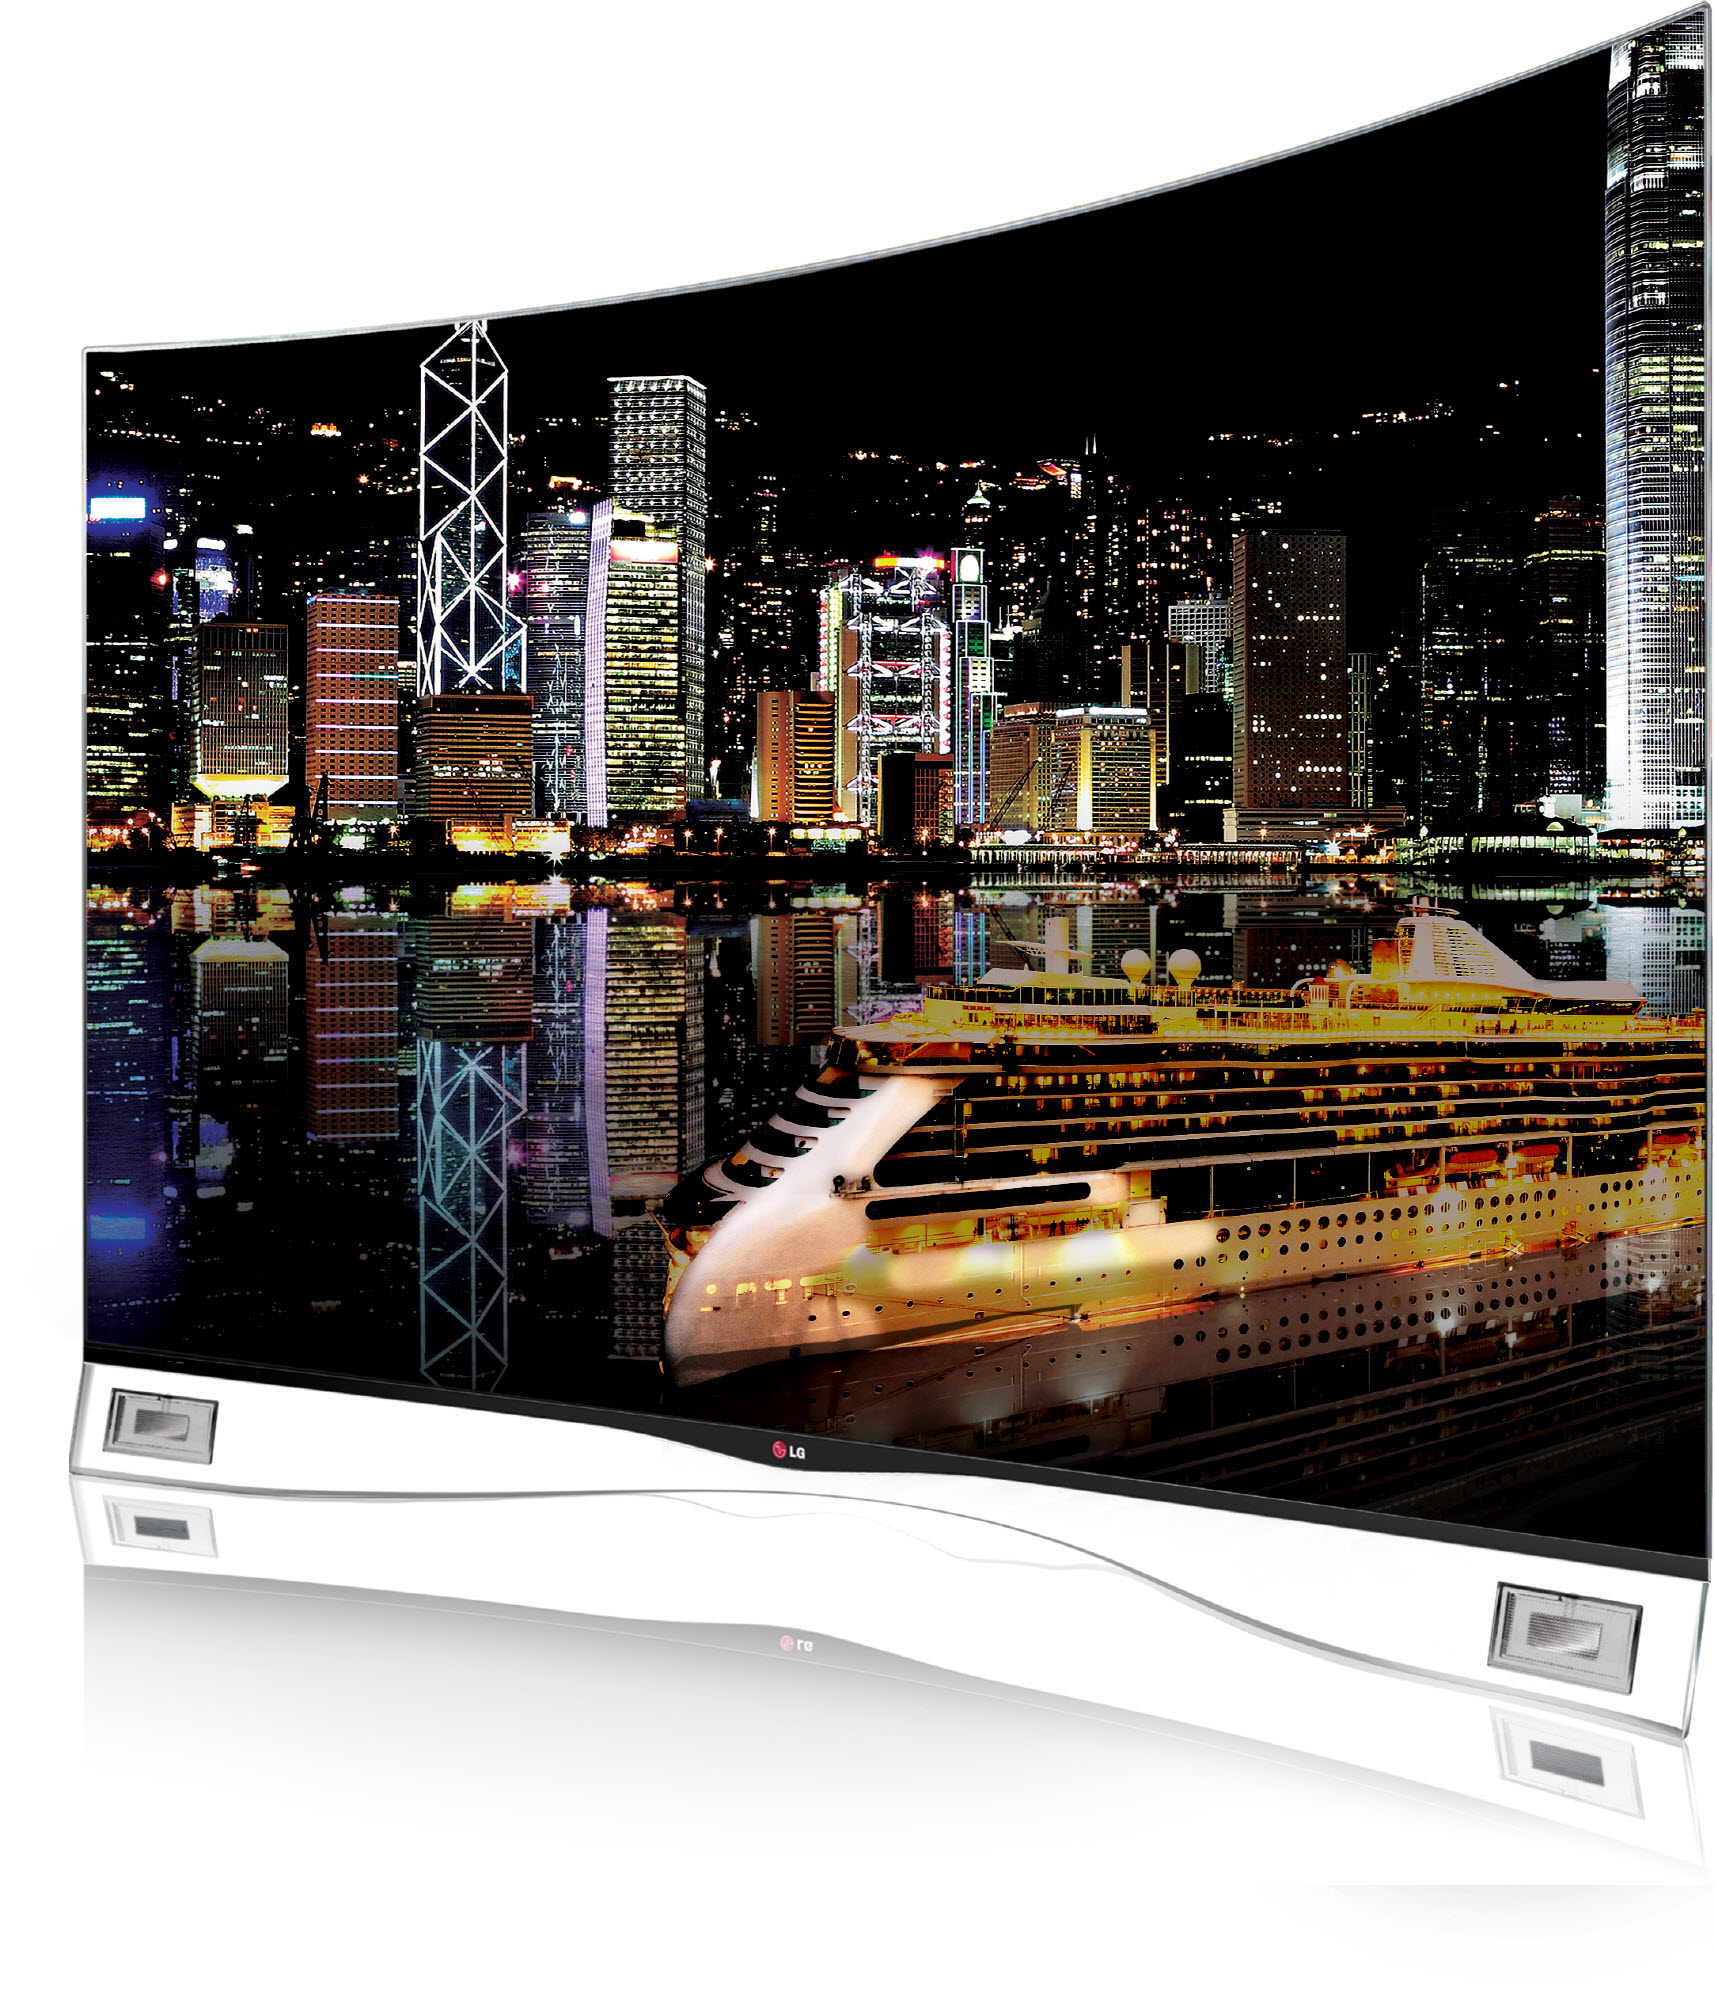 The LG CURVED OLED TV model 55EA9800 displaying Hong Kong’s impressive night skyline